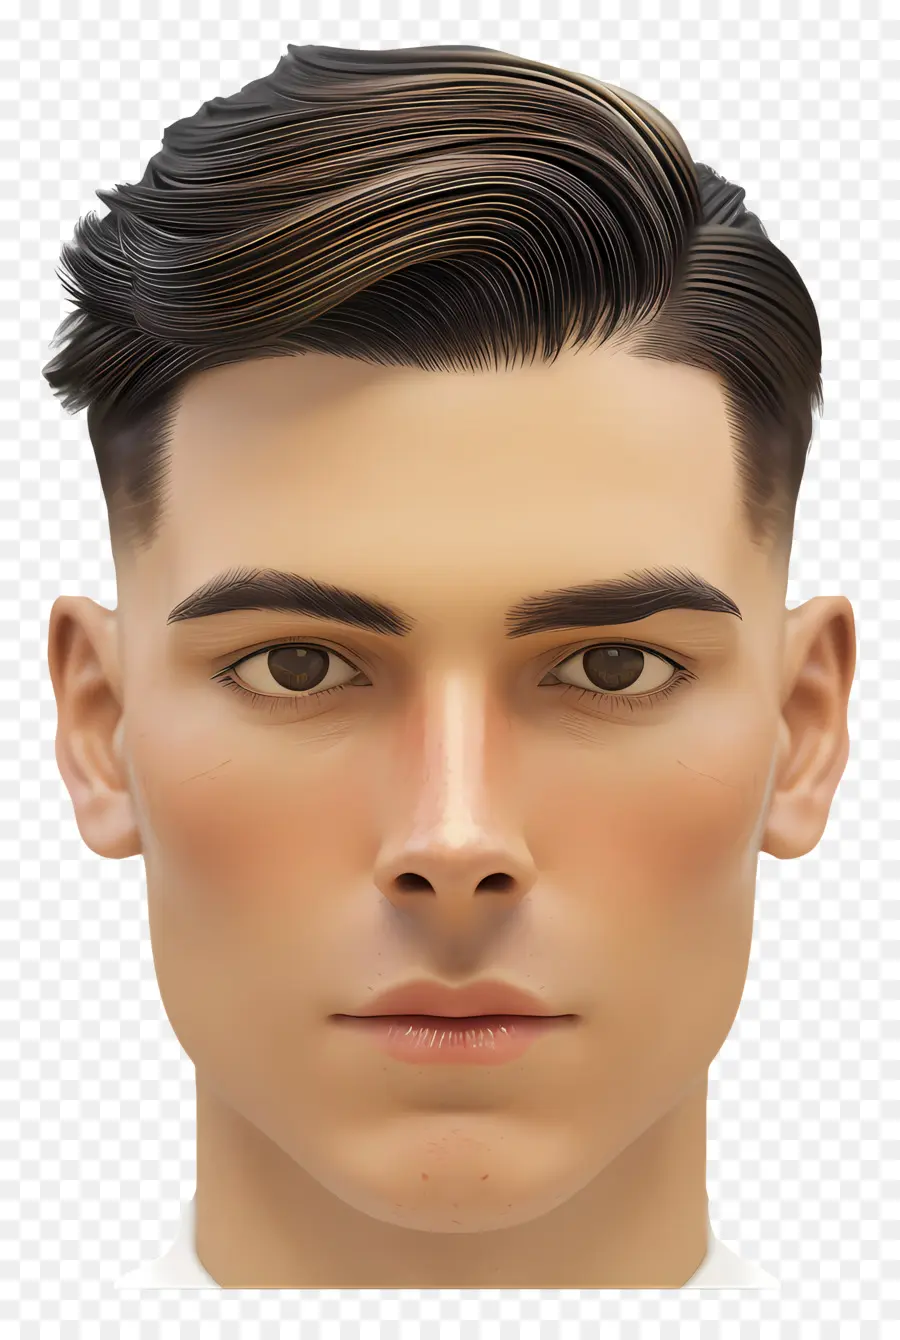 short mid fade haircut 3d model slicked back hair goatee beard male head